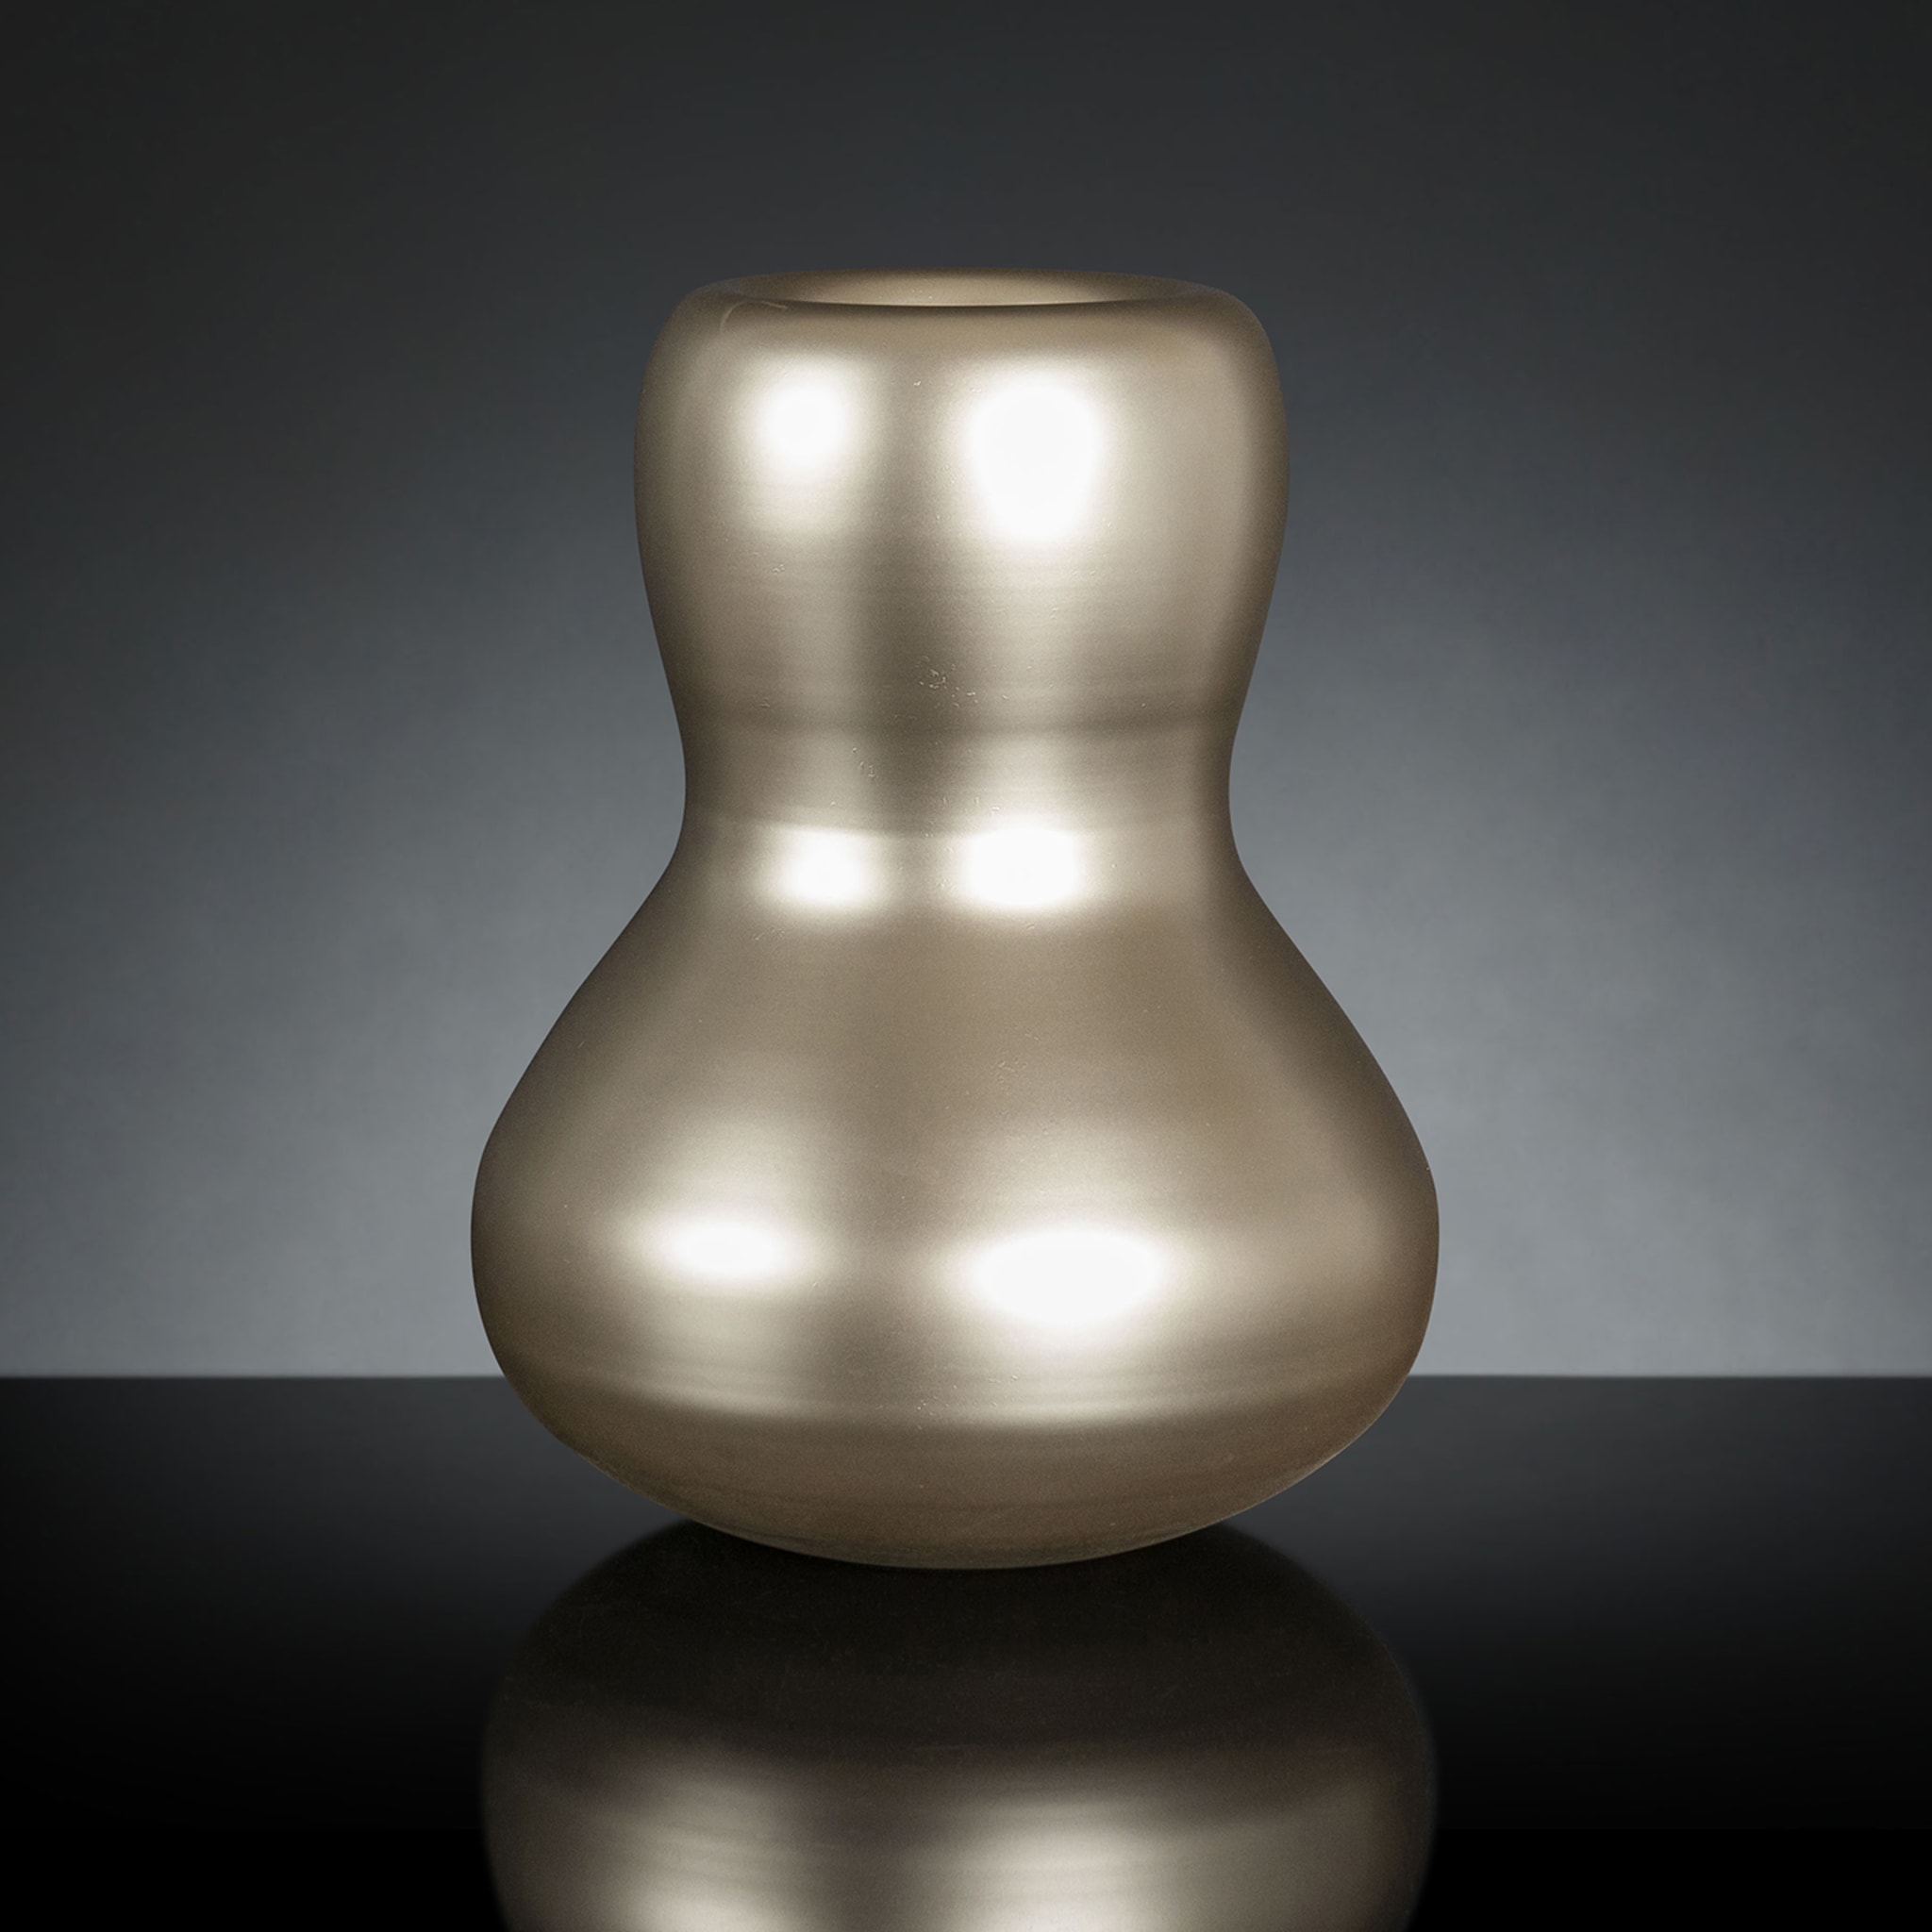 Bean Satin Beige Decorative Vase #1 - Alternative view 1